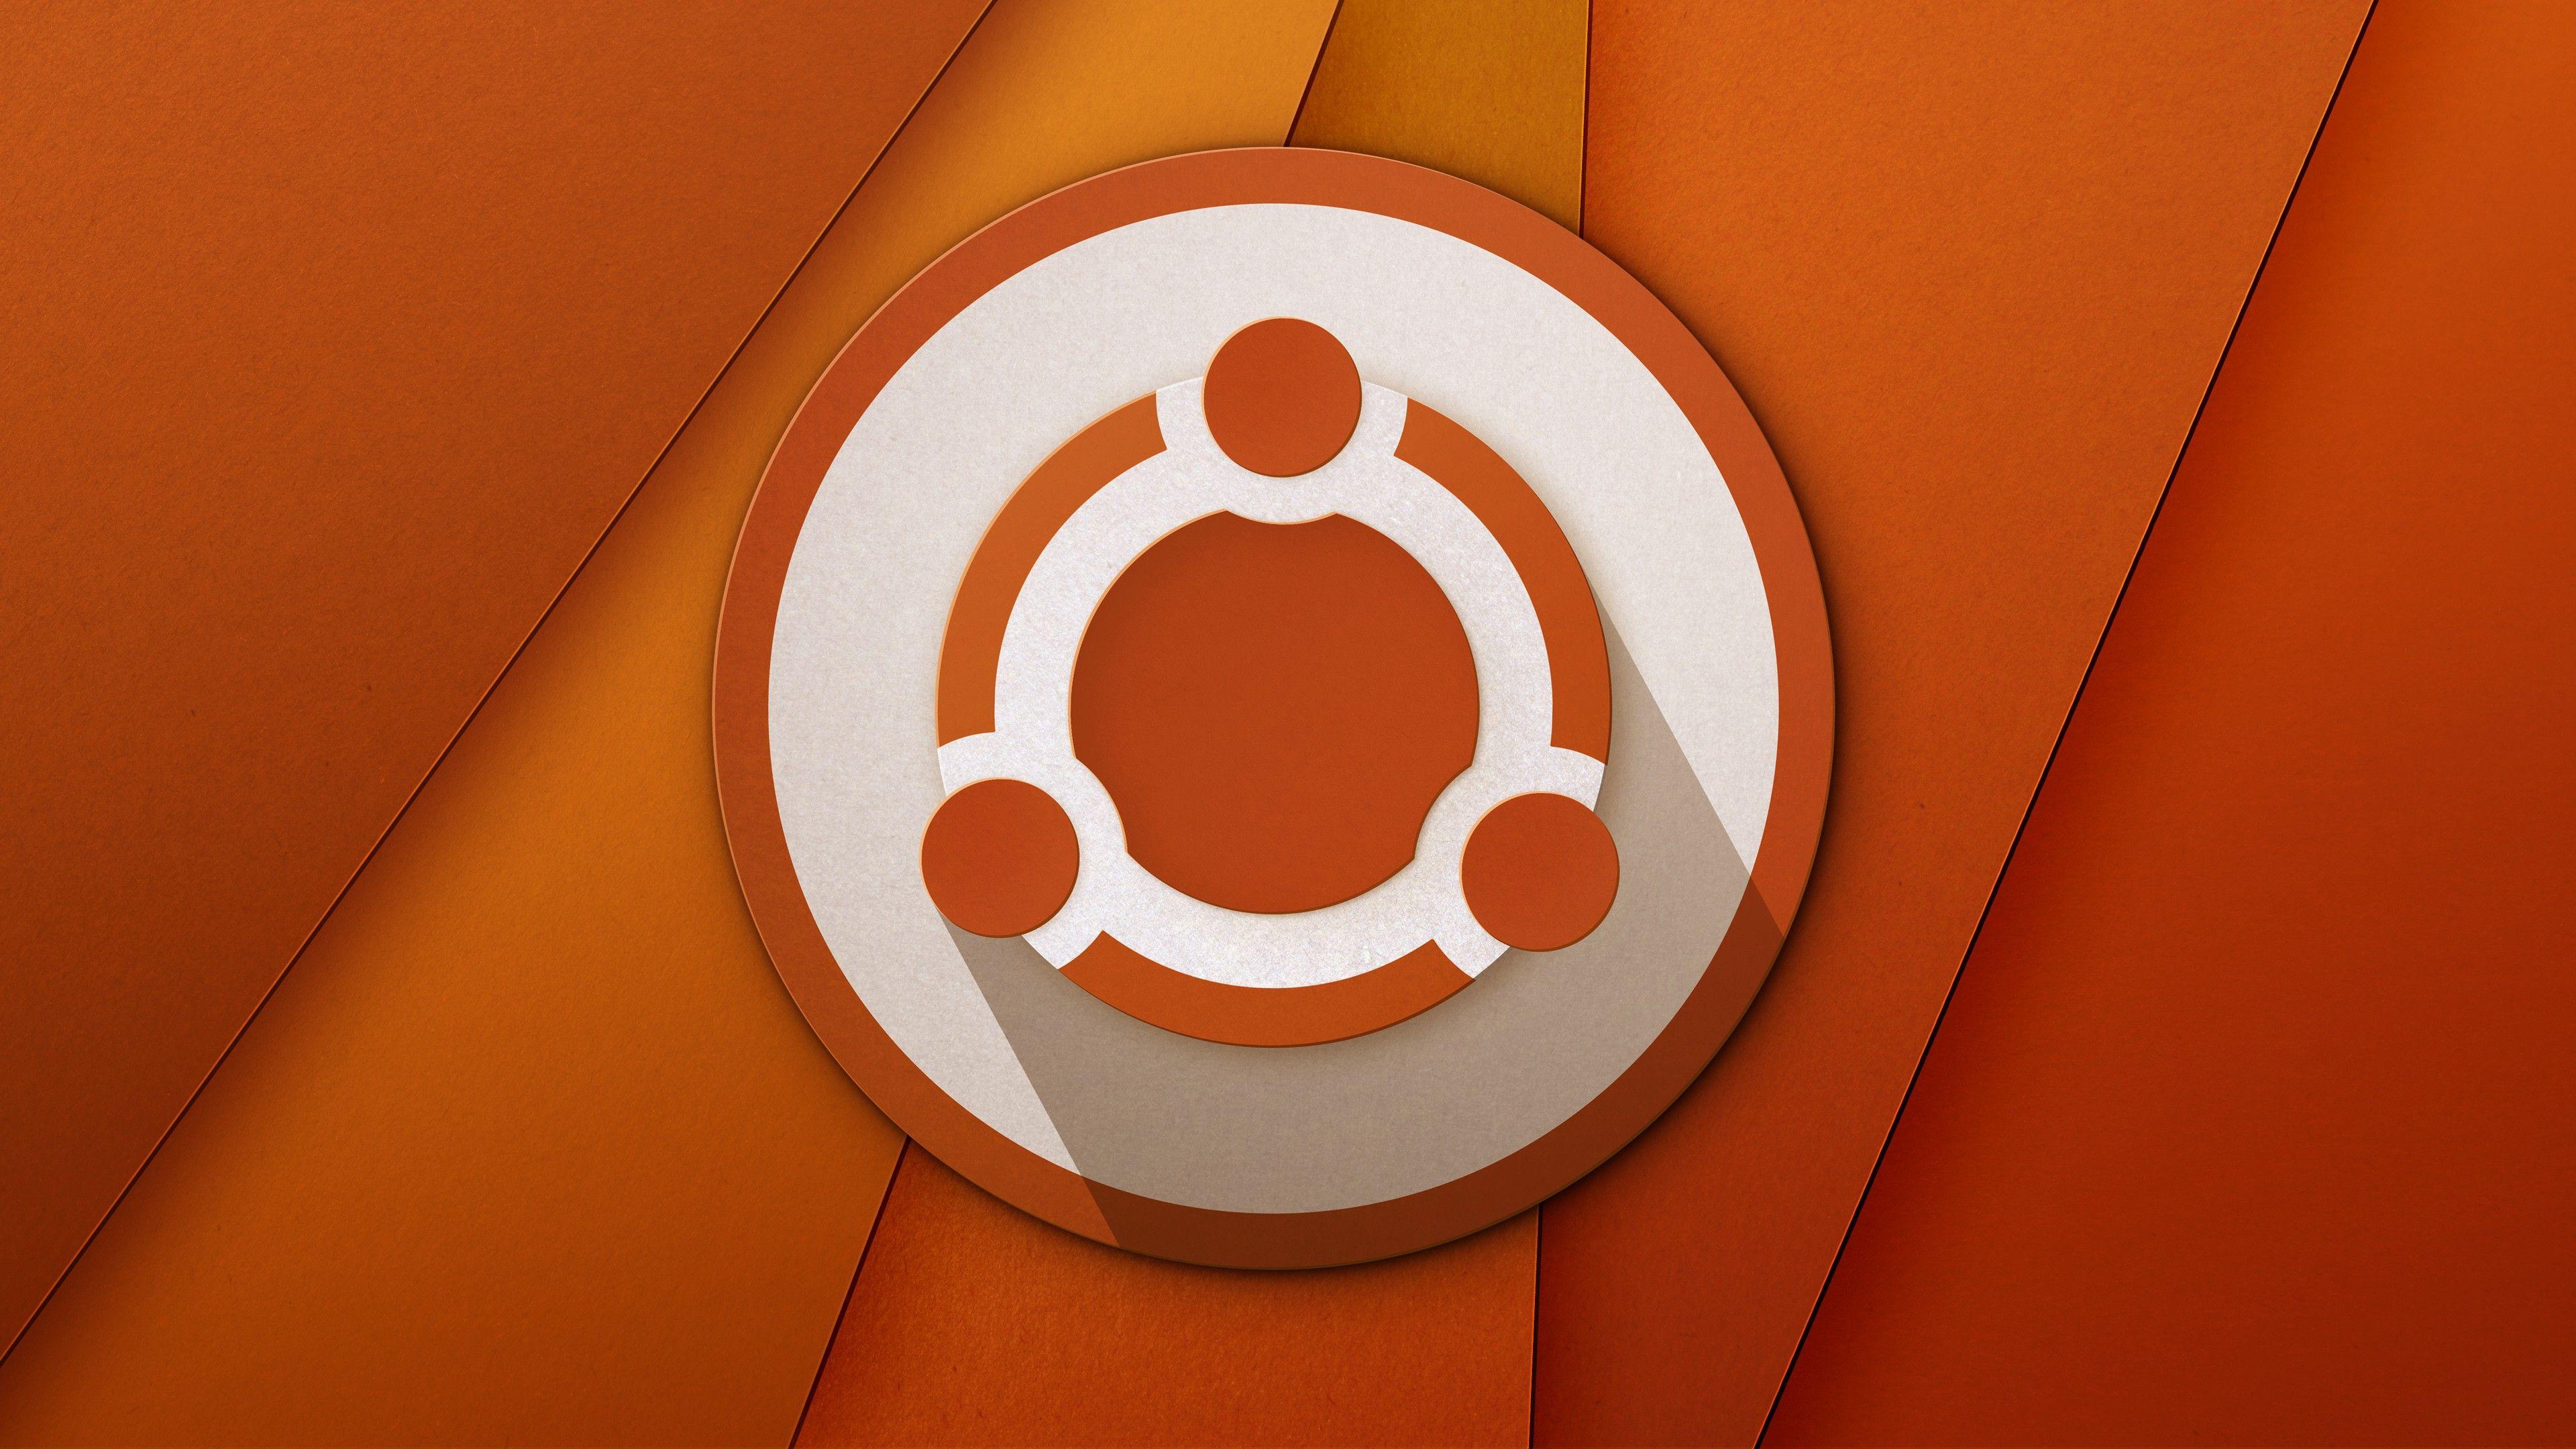 Linux Ubuntu Logo - Wallpaper : colorful, illustration, red, sign, Linux, orange, circle